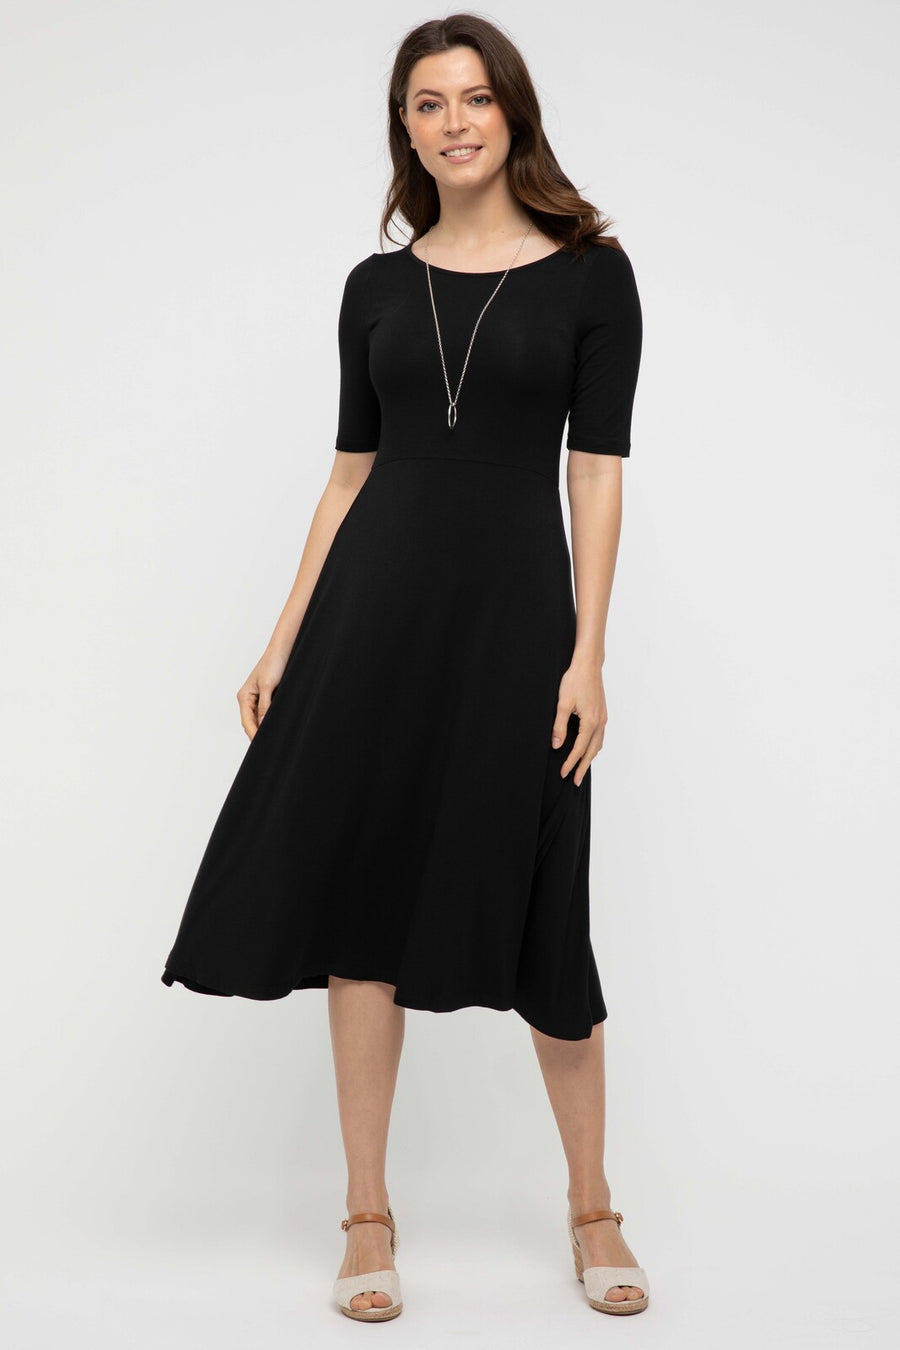 REVIEW Australia Black Fit & Flare Dress with Back Cut-Out - Size AU 8